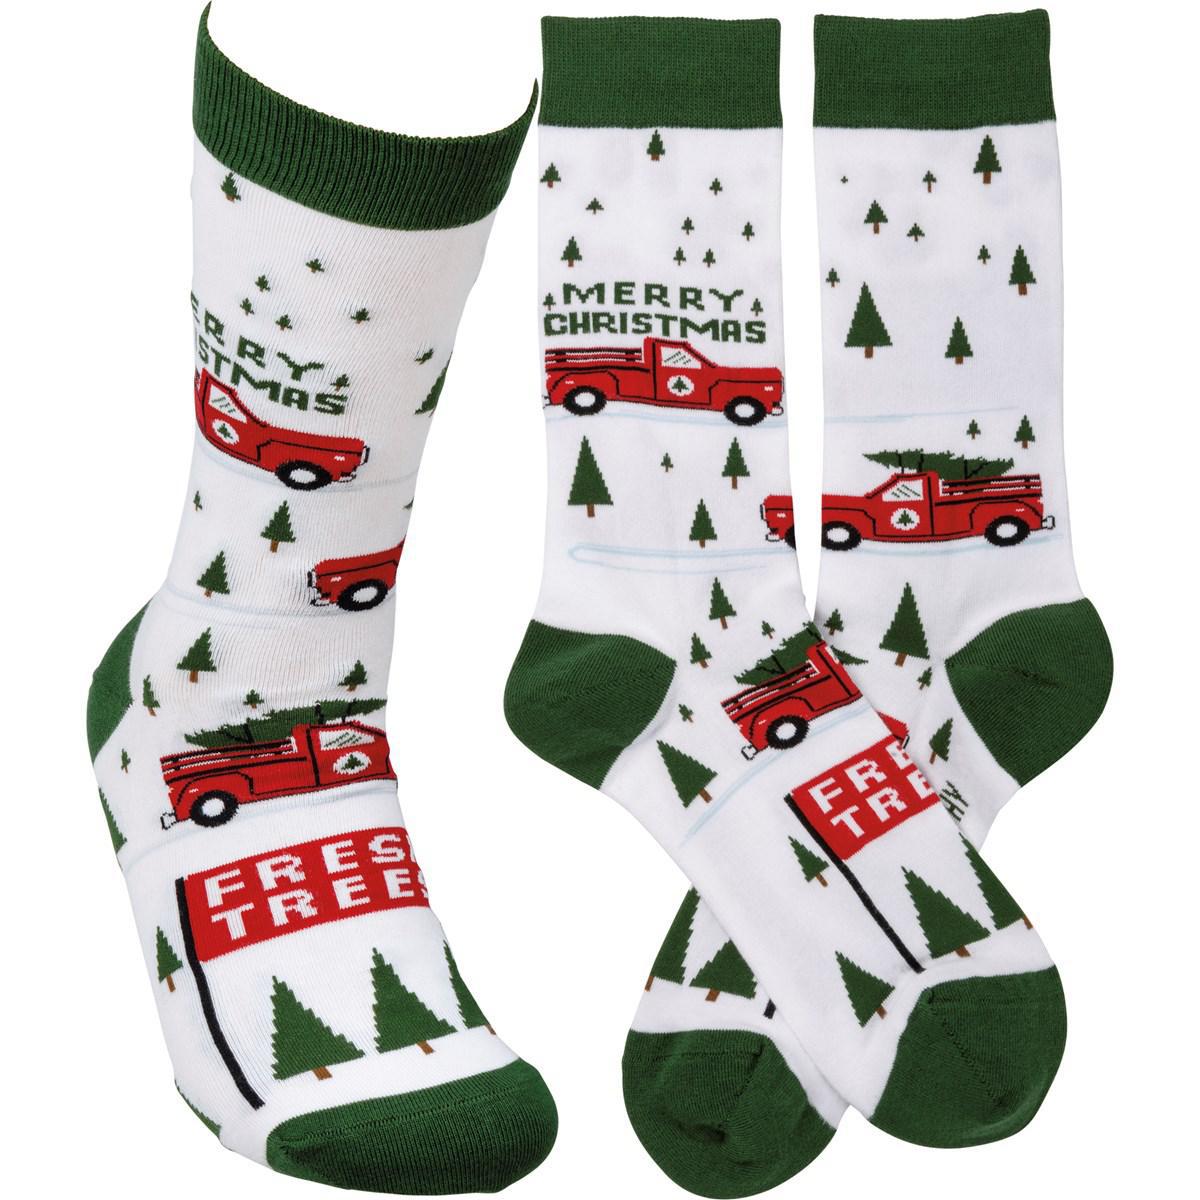 Truck & Tree - Merry Christmas Socks